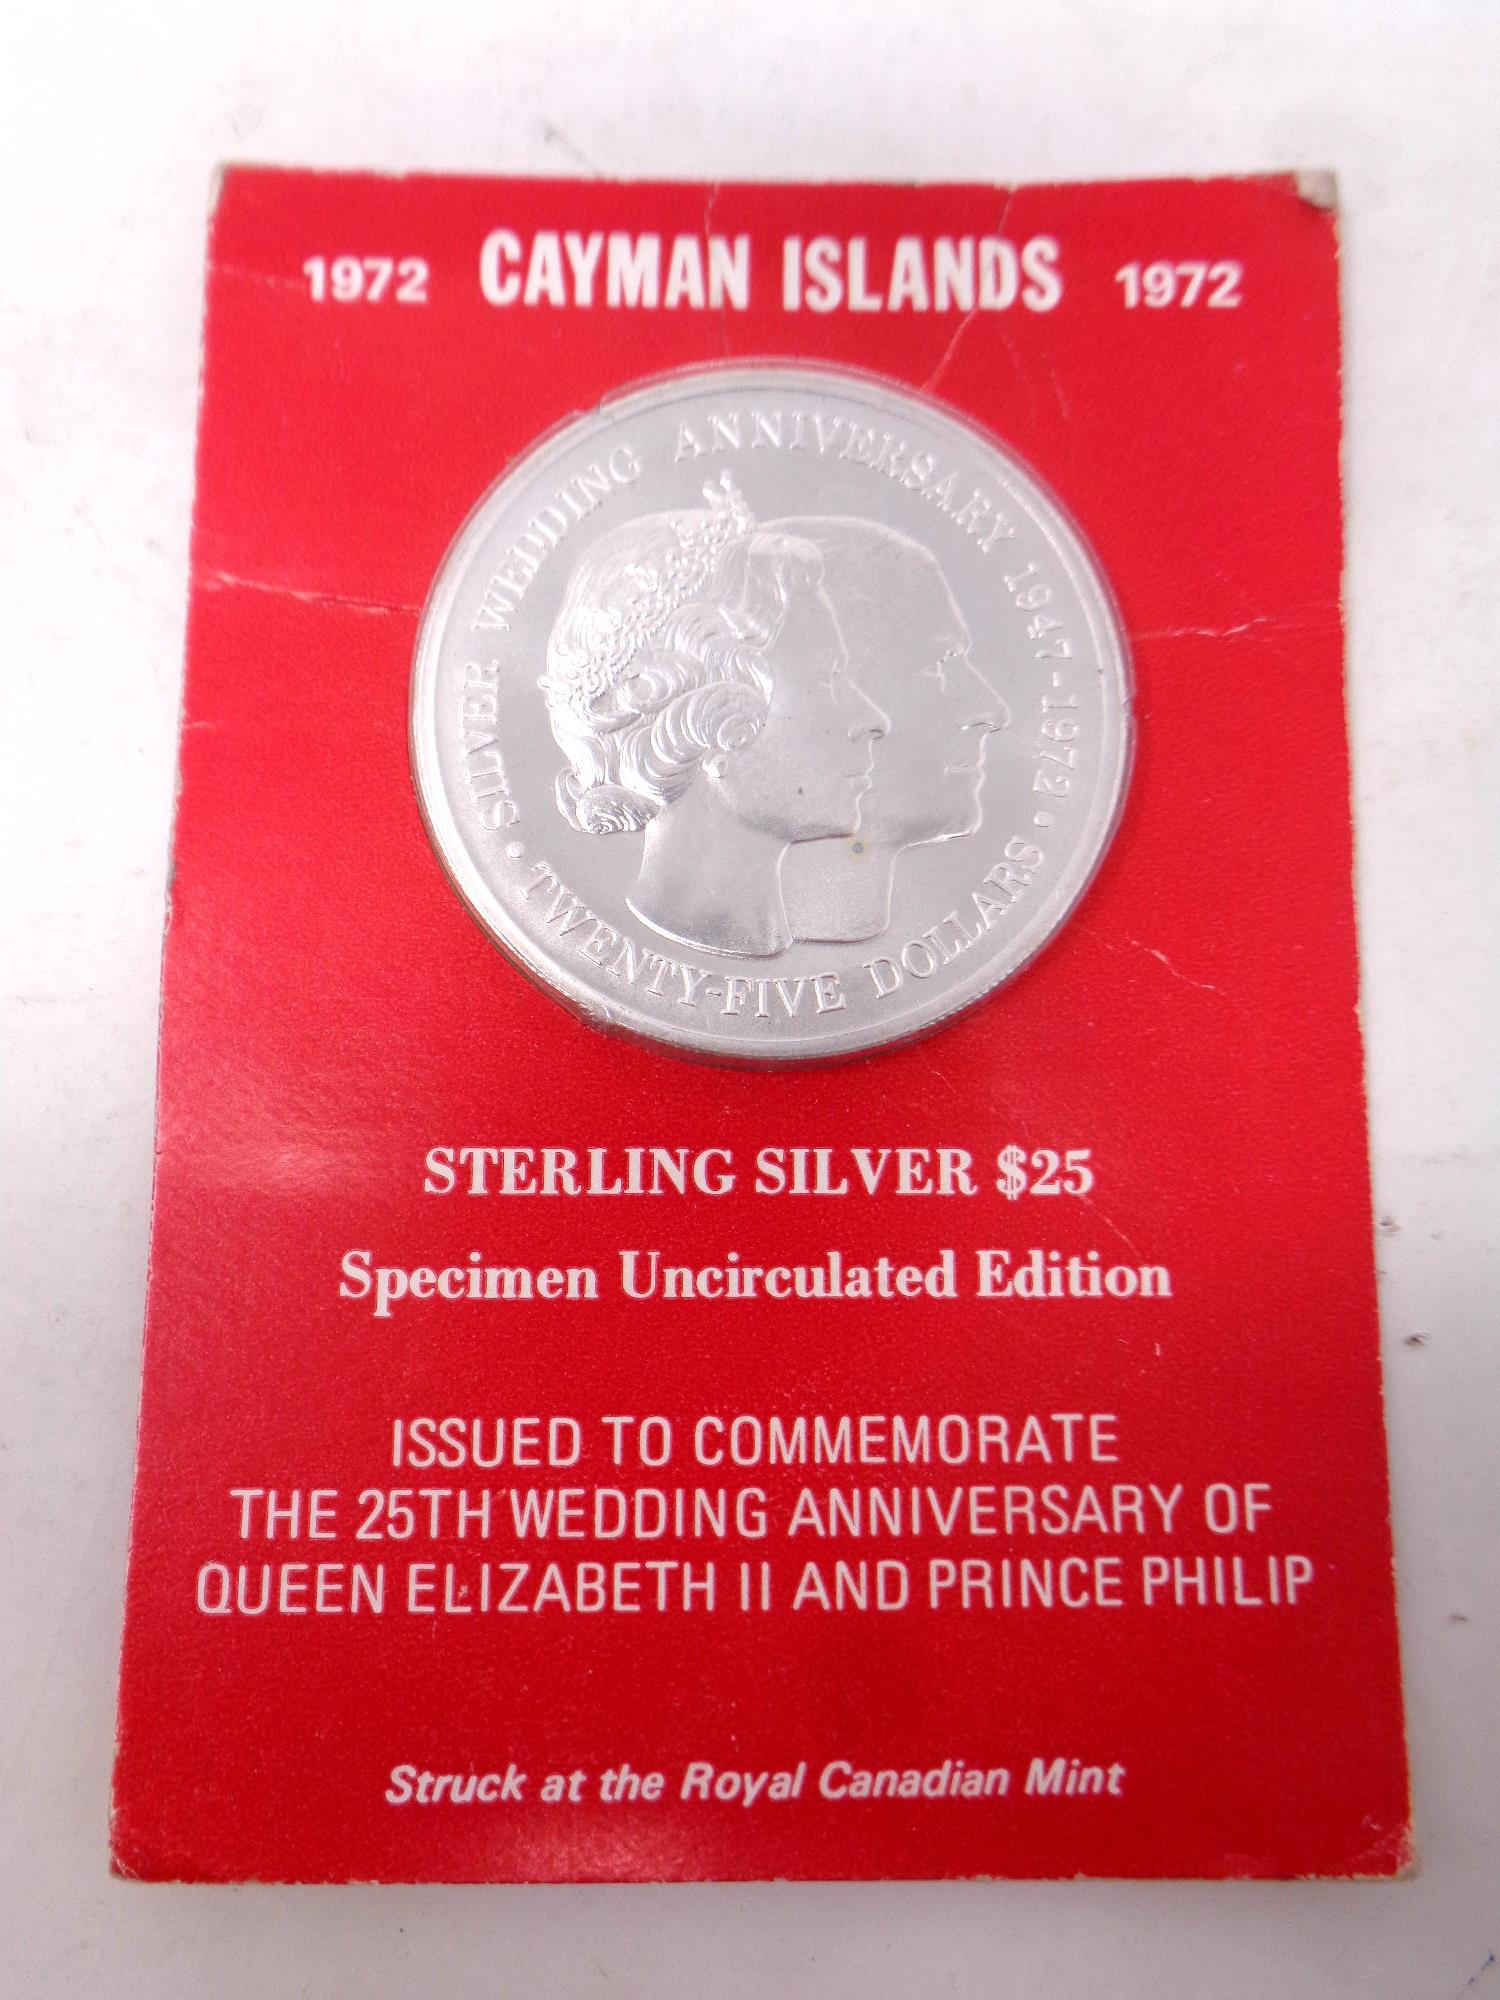 A silver $25 Cayman Islands coin